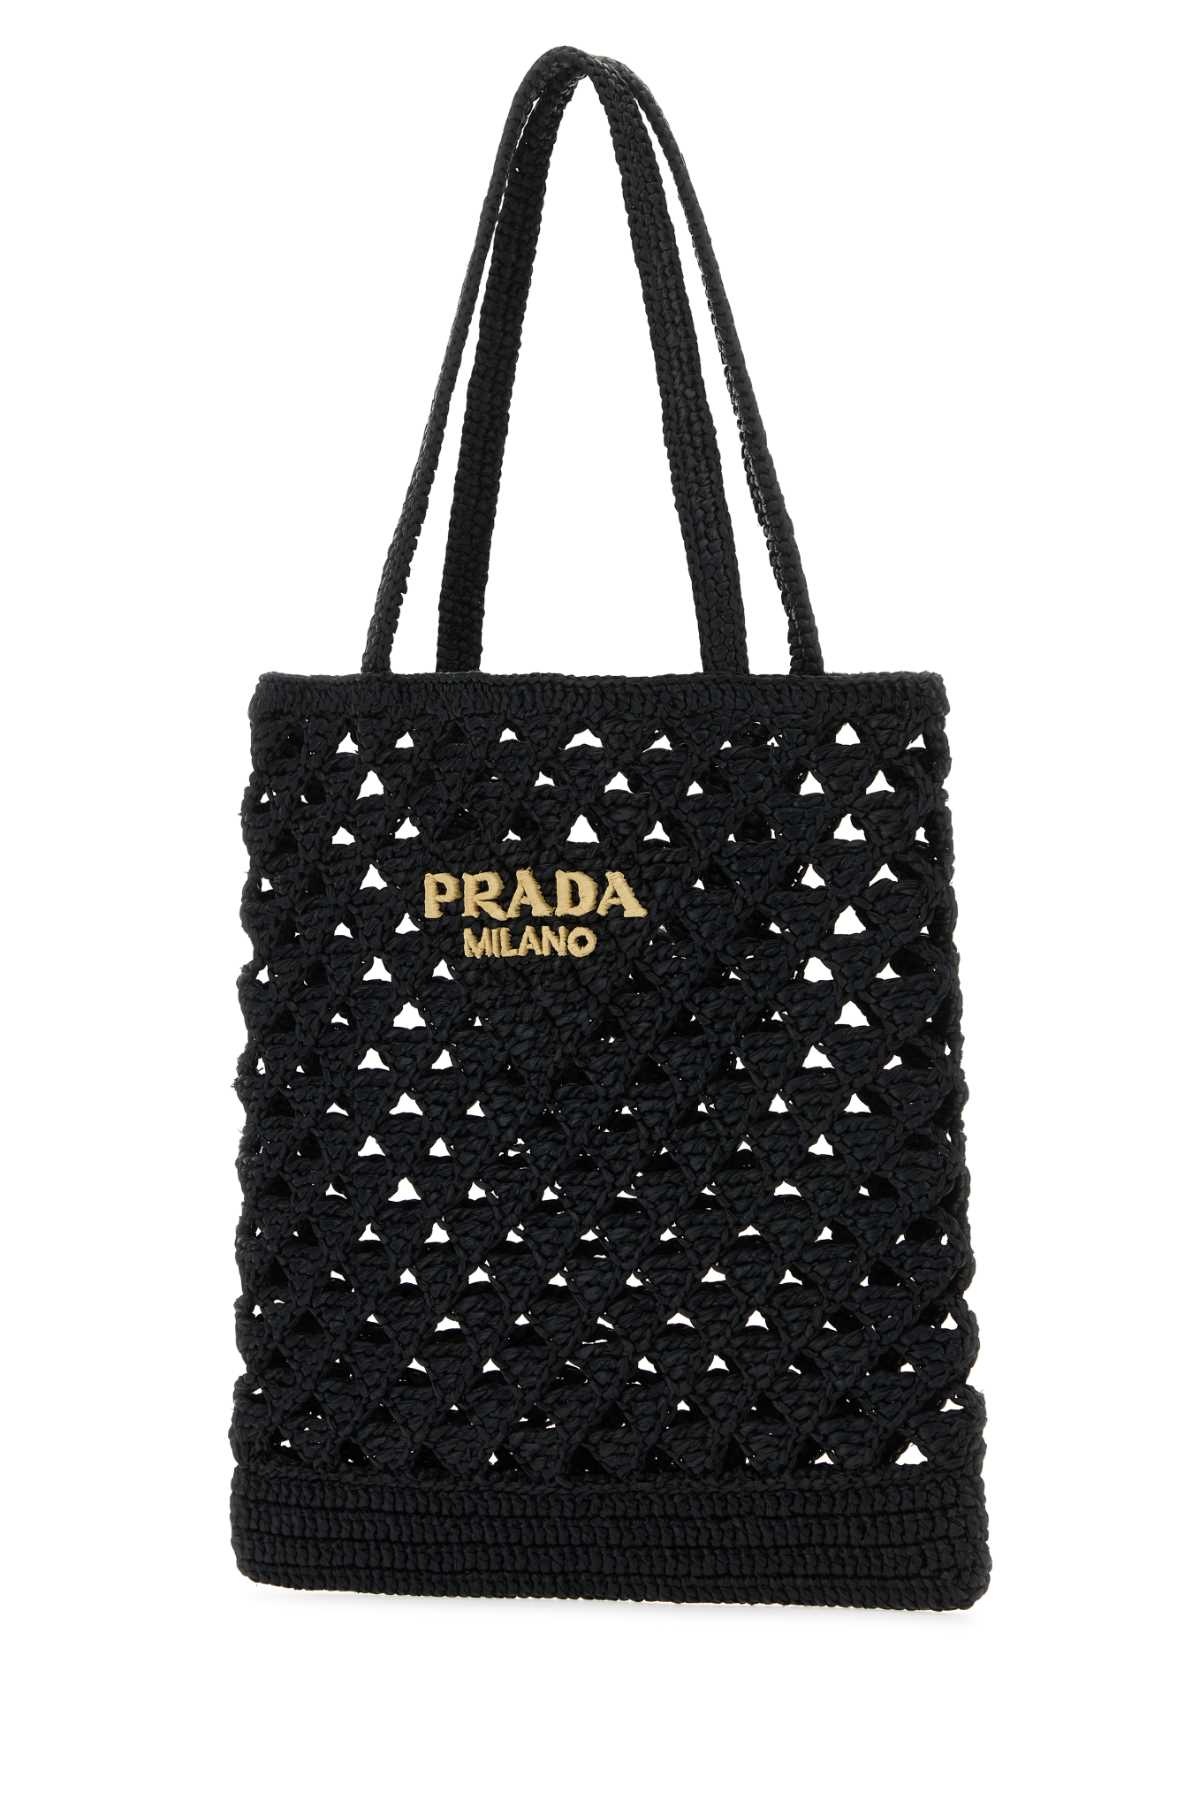 Prada Black Straw Handbag In Neroc